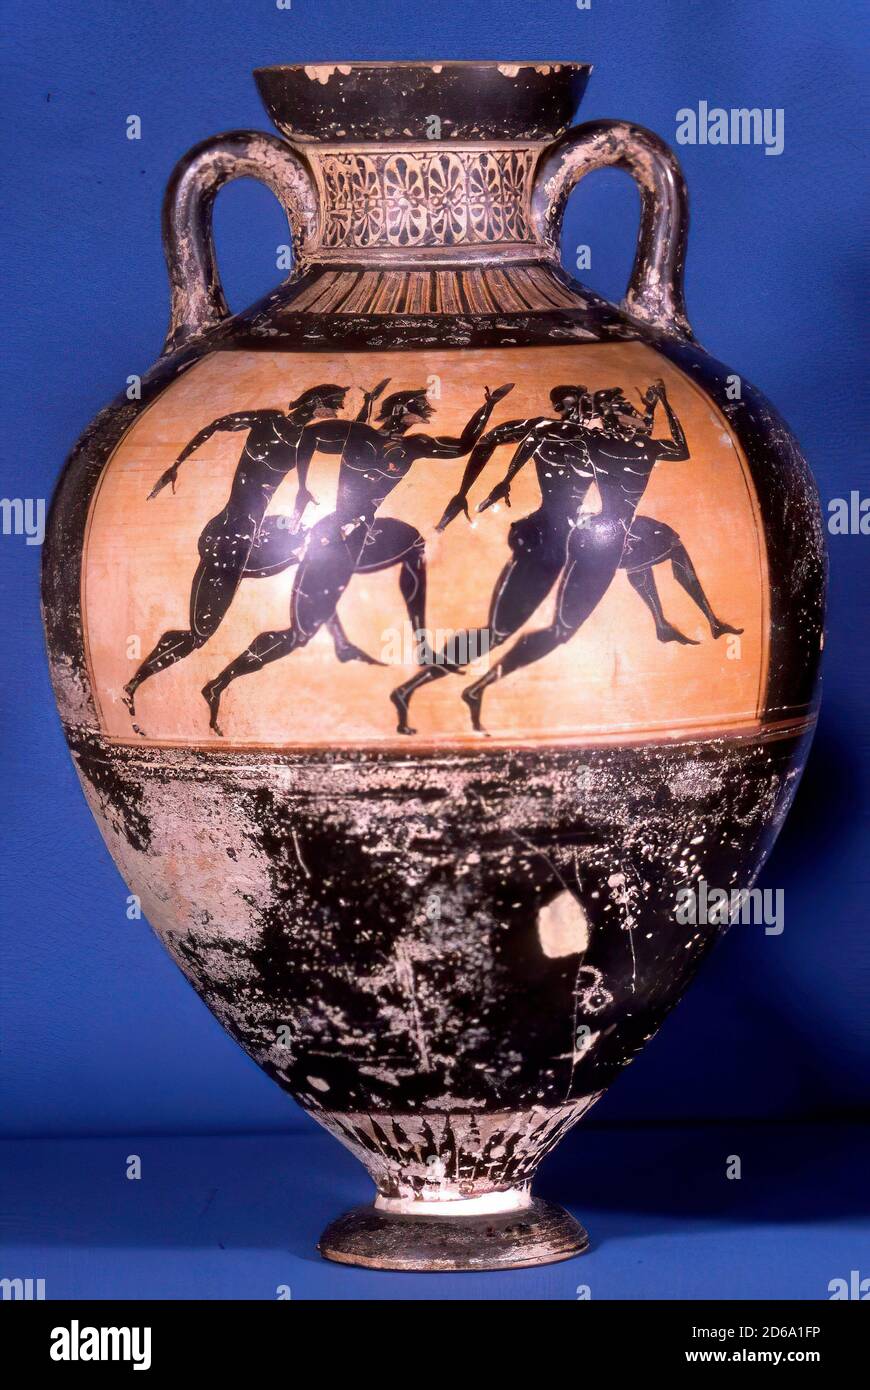 Vase (amphora) with image of the discipline ran. Stock Photo